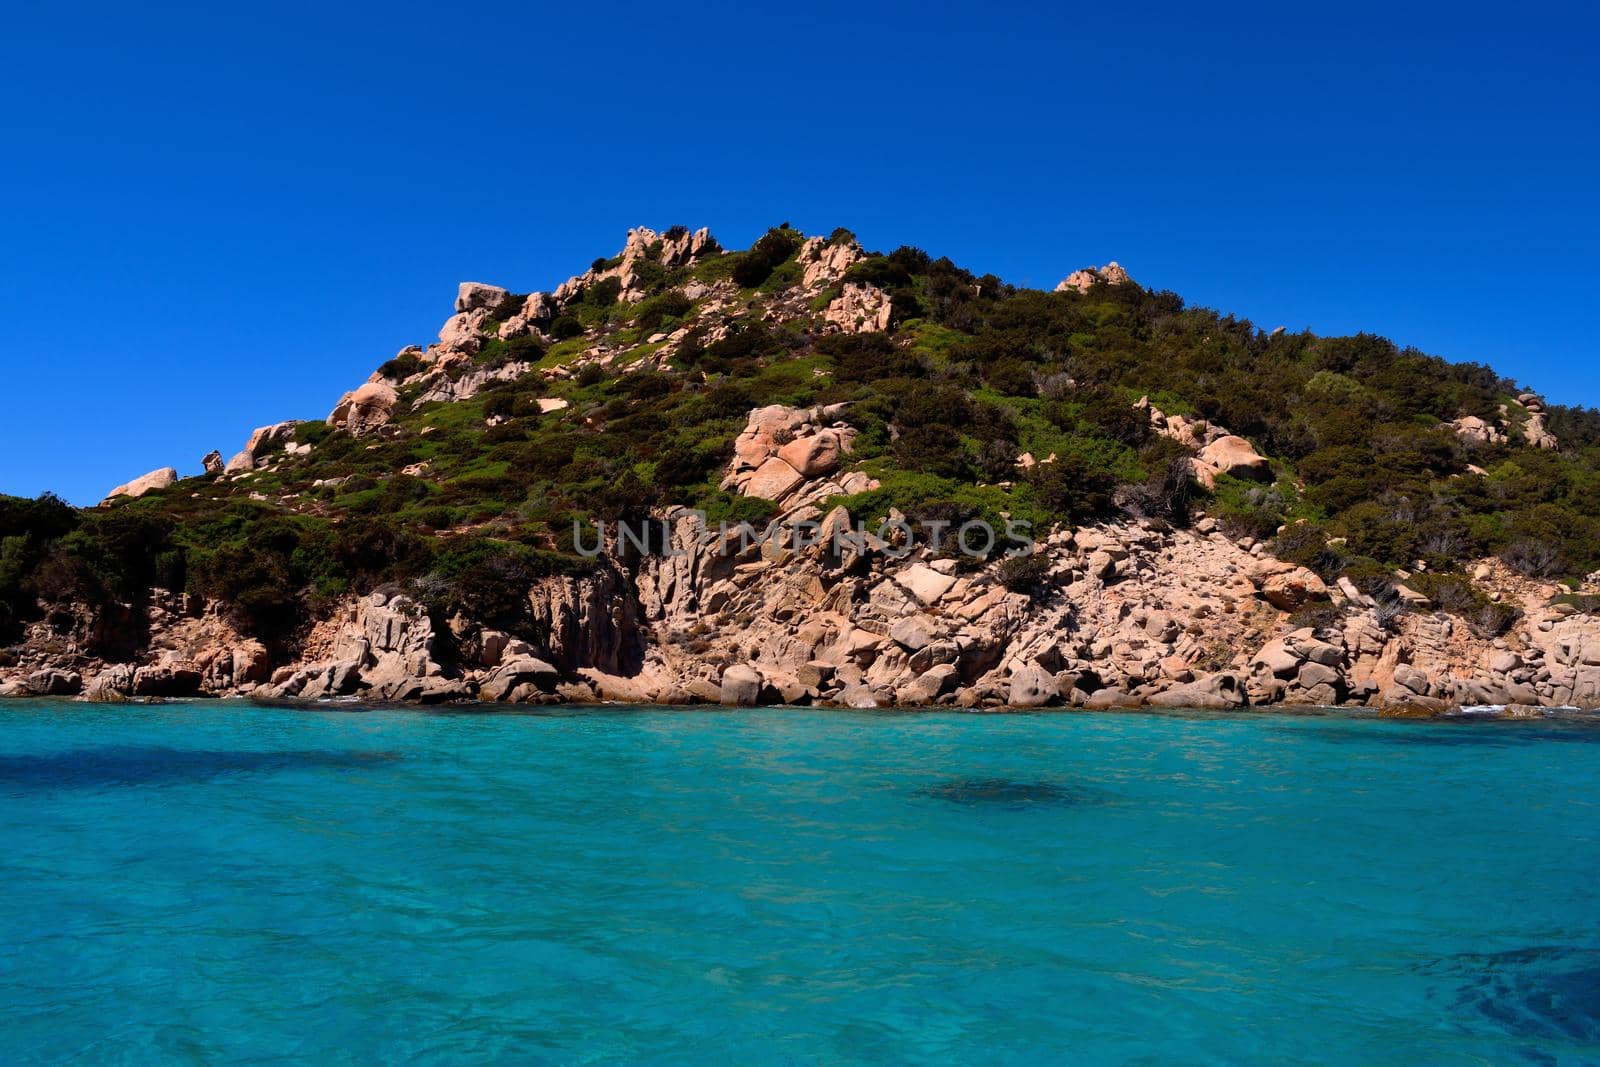 View of the wonderful islands, sea and rocks of Costa Smeralda, Sardinia, Italy by silentstock639